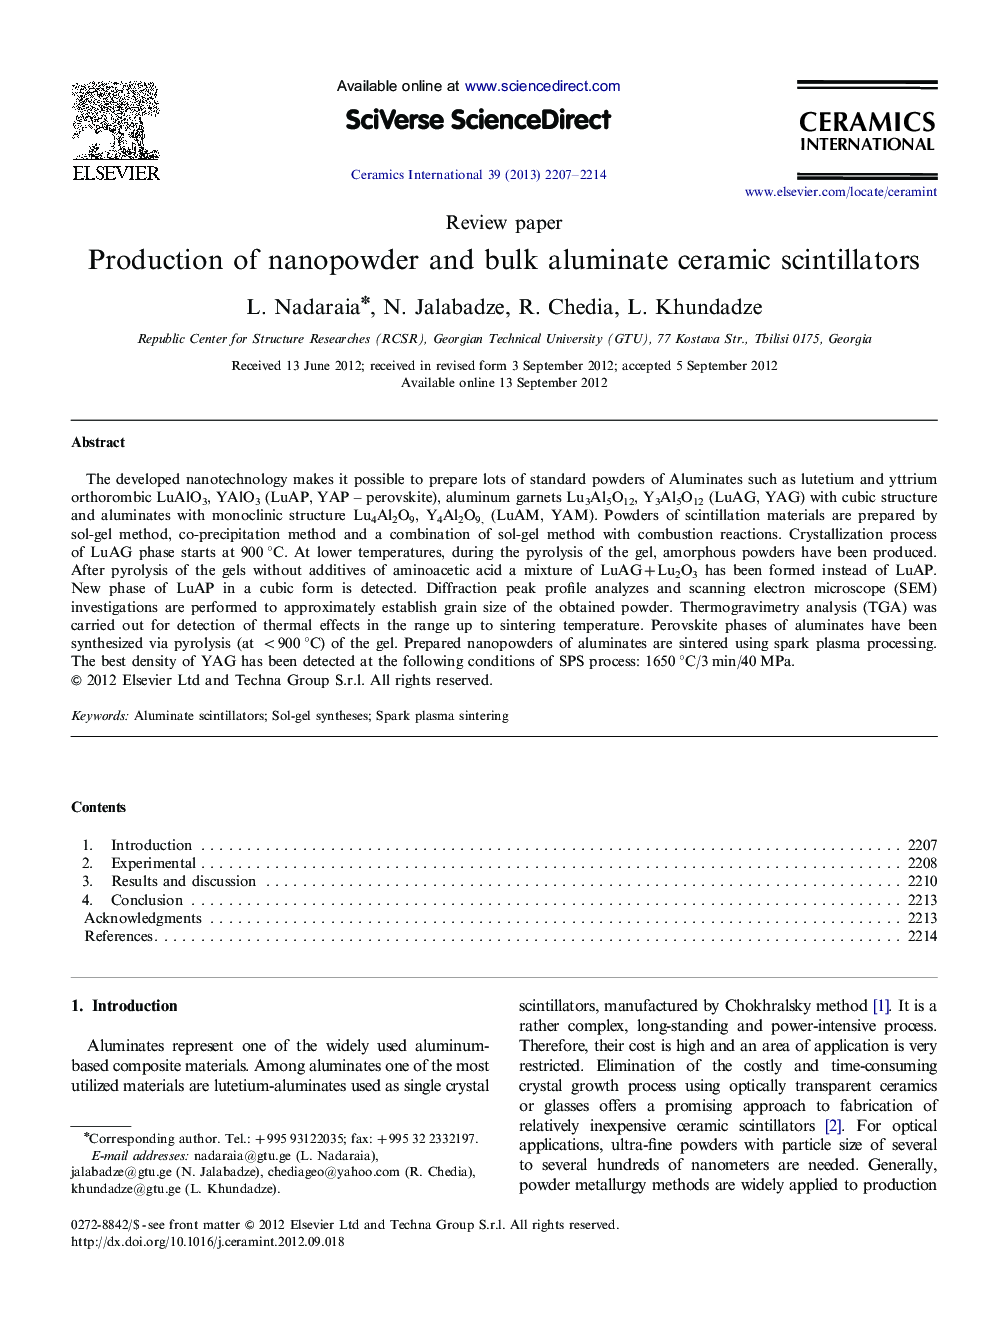 Production of nanopowder and bulk aluminate ceramic scintillators